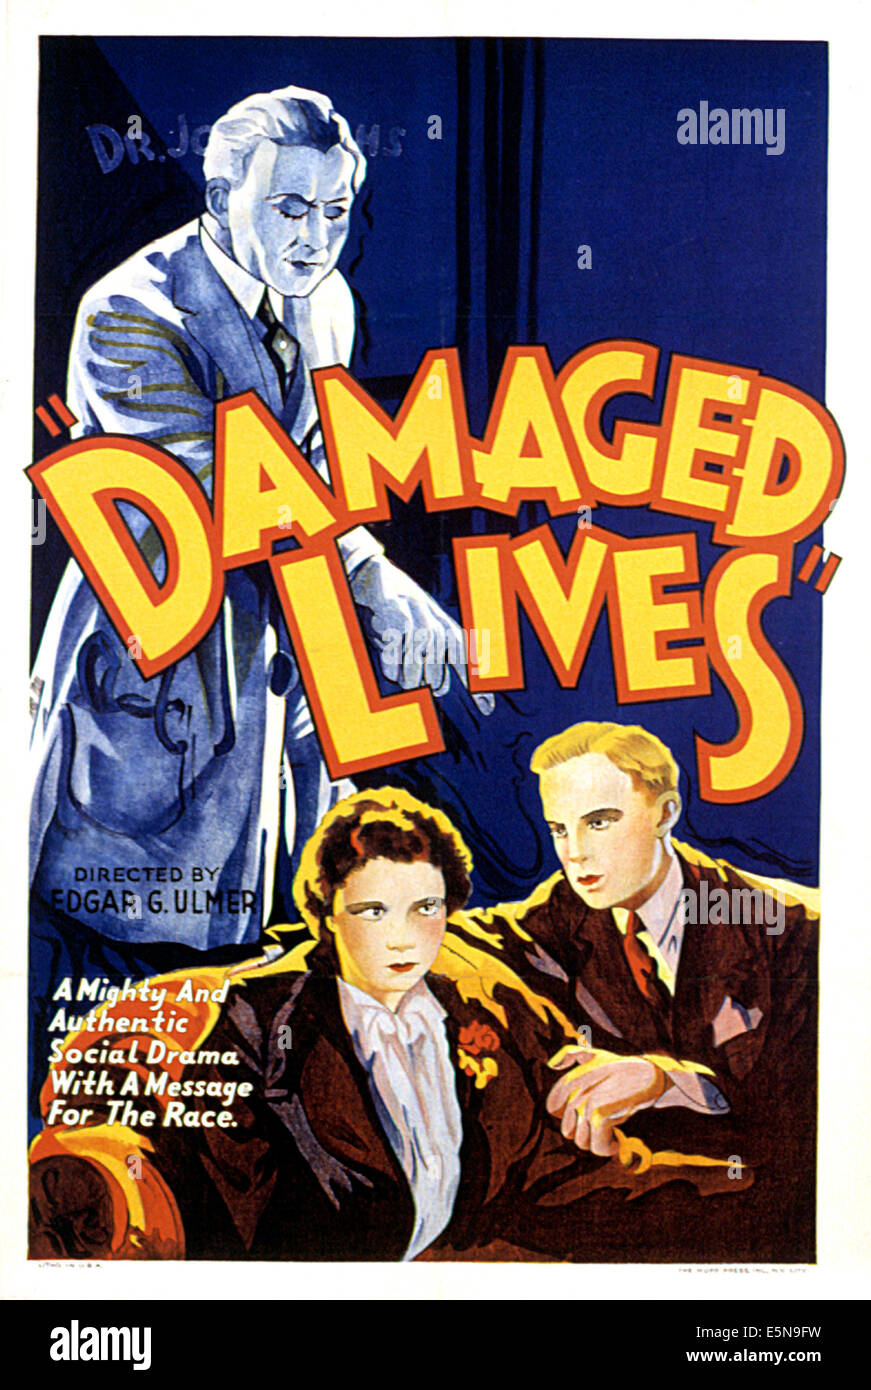 DAMAGED LIVES, Diane Sinclair, Lyman Williams, 1937 Stock Photo